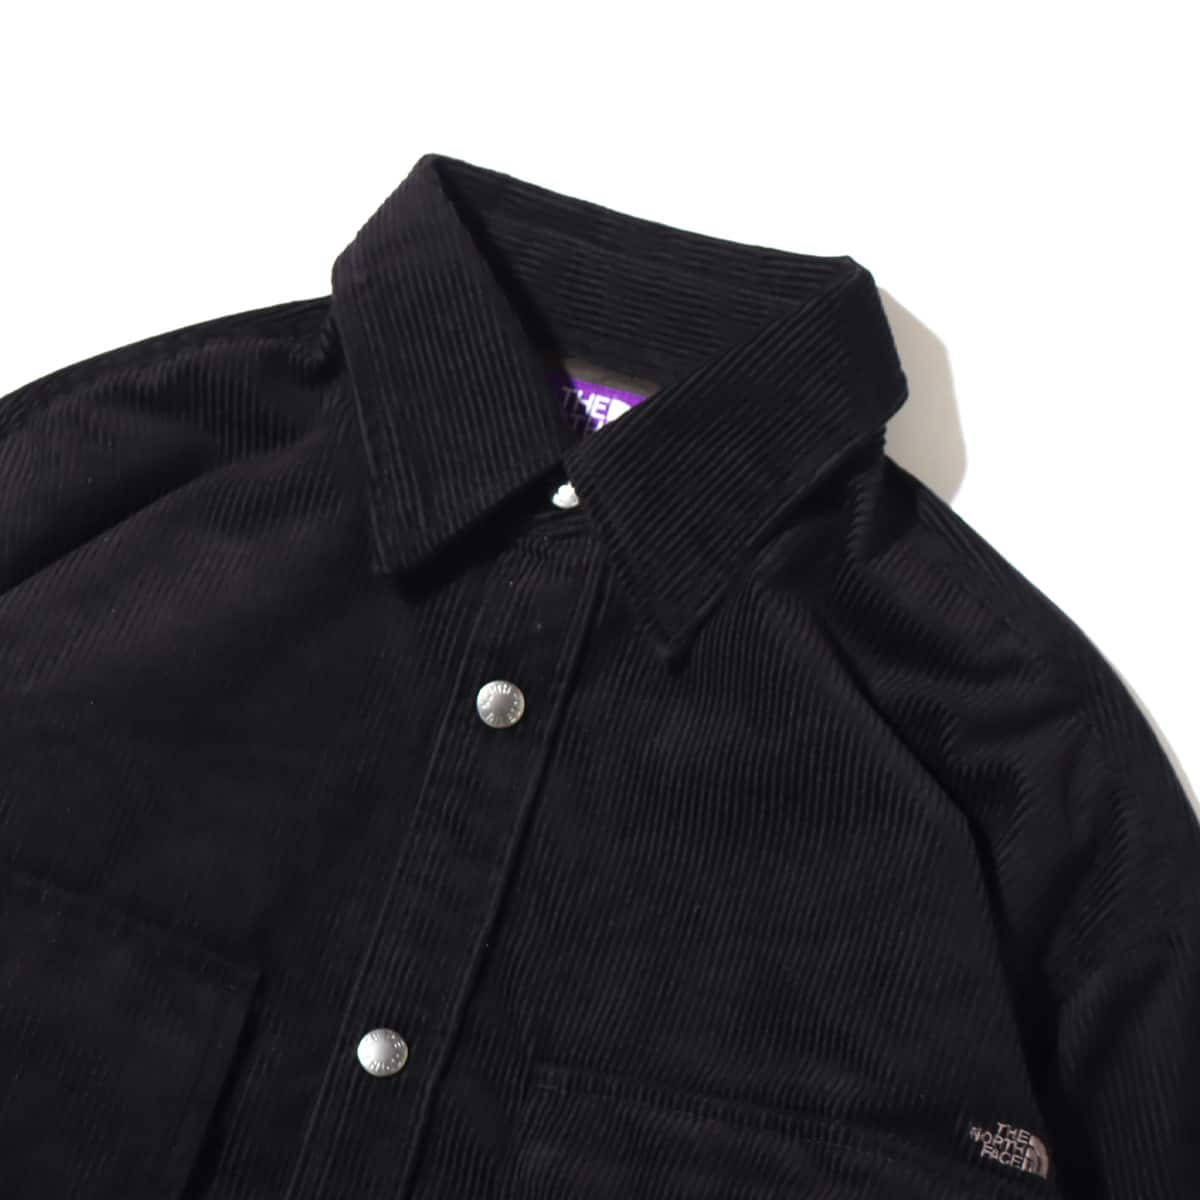 THE NORTH FACE PURPLE LABEL Corduroy Insulation Shirt Jacket Black 